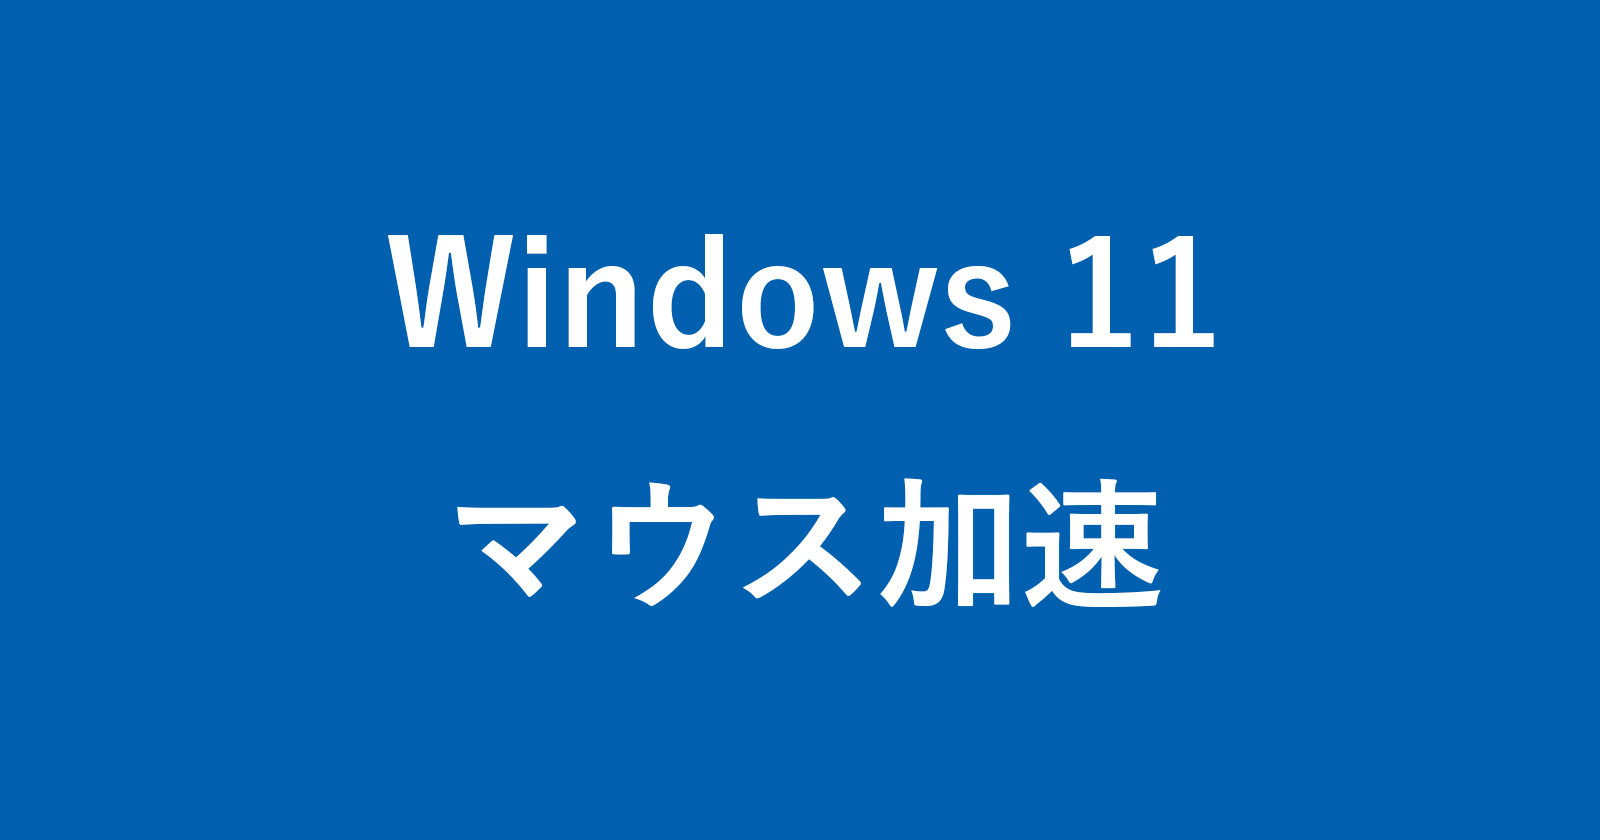 windows 11 mouse acceleration